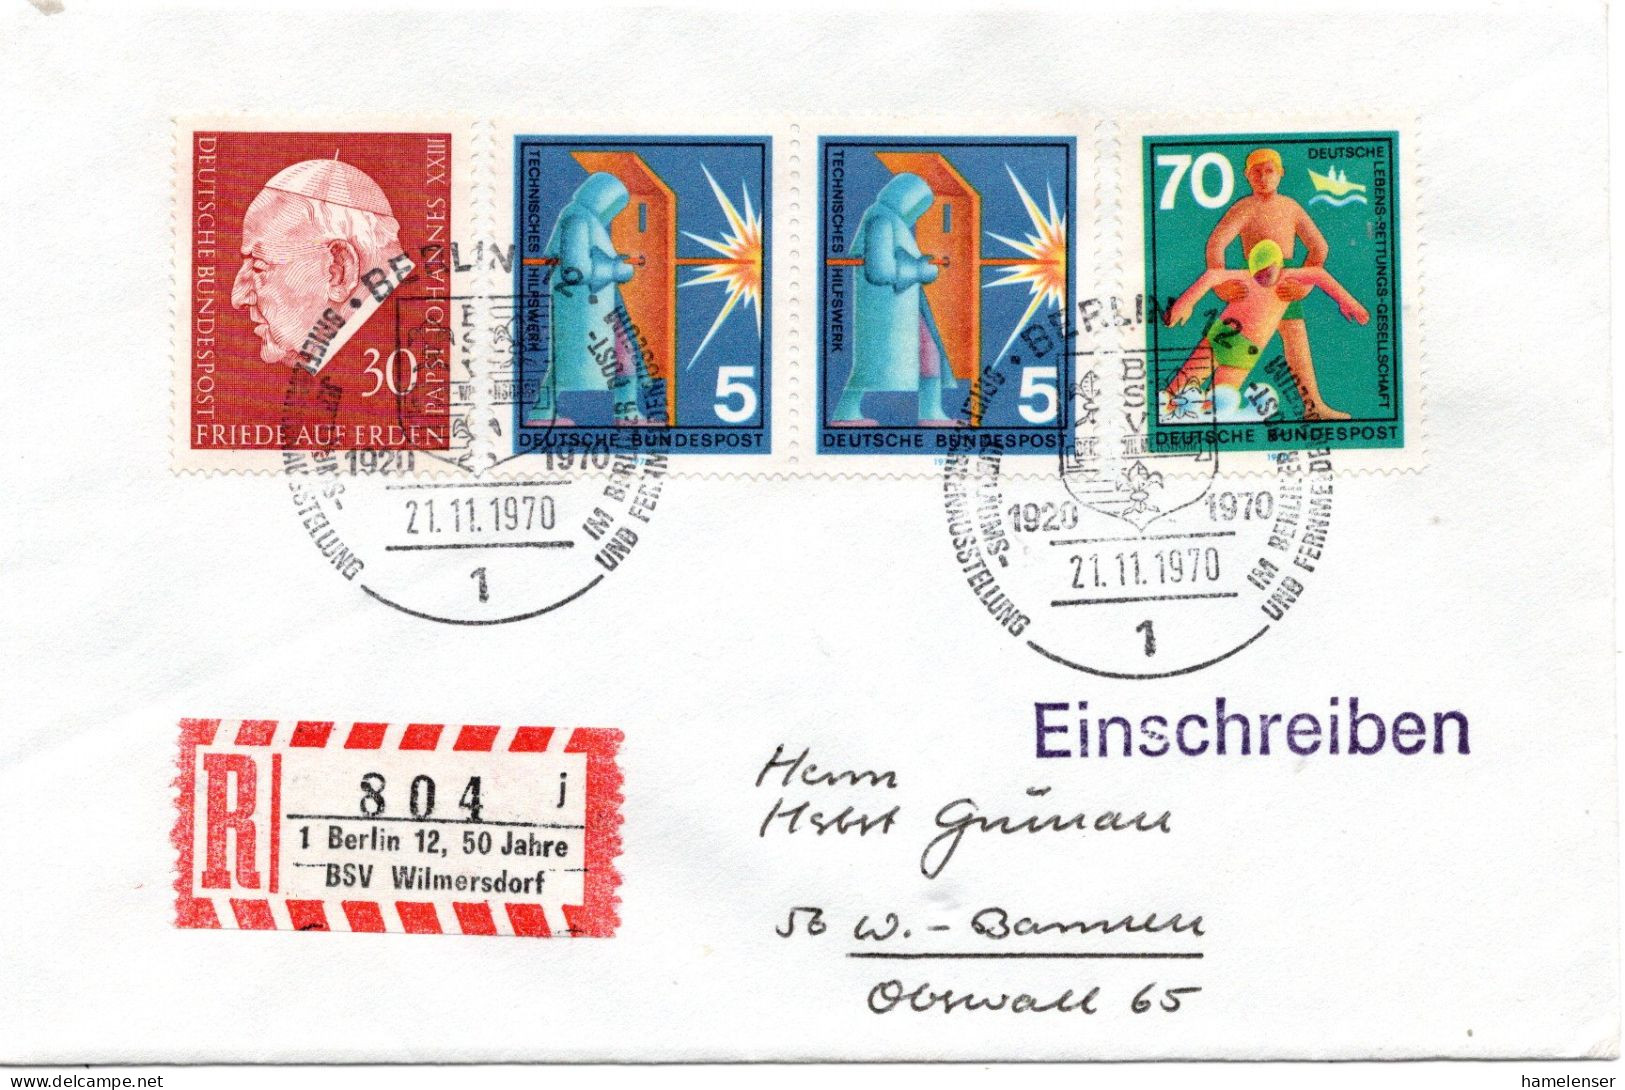 74881 - Bund - 1970 - 70Pfg DLRG MiF A R-Bf BERLIN - 50 JAHRE BSV WILMERSDORF -> Wuppertal, M So-R-Zettel - Briefe U. Dokumente